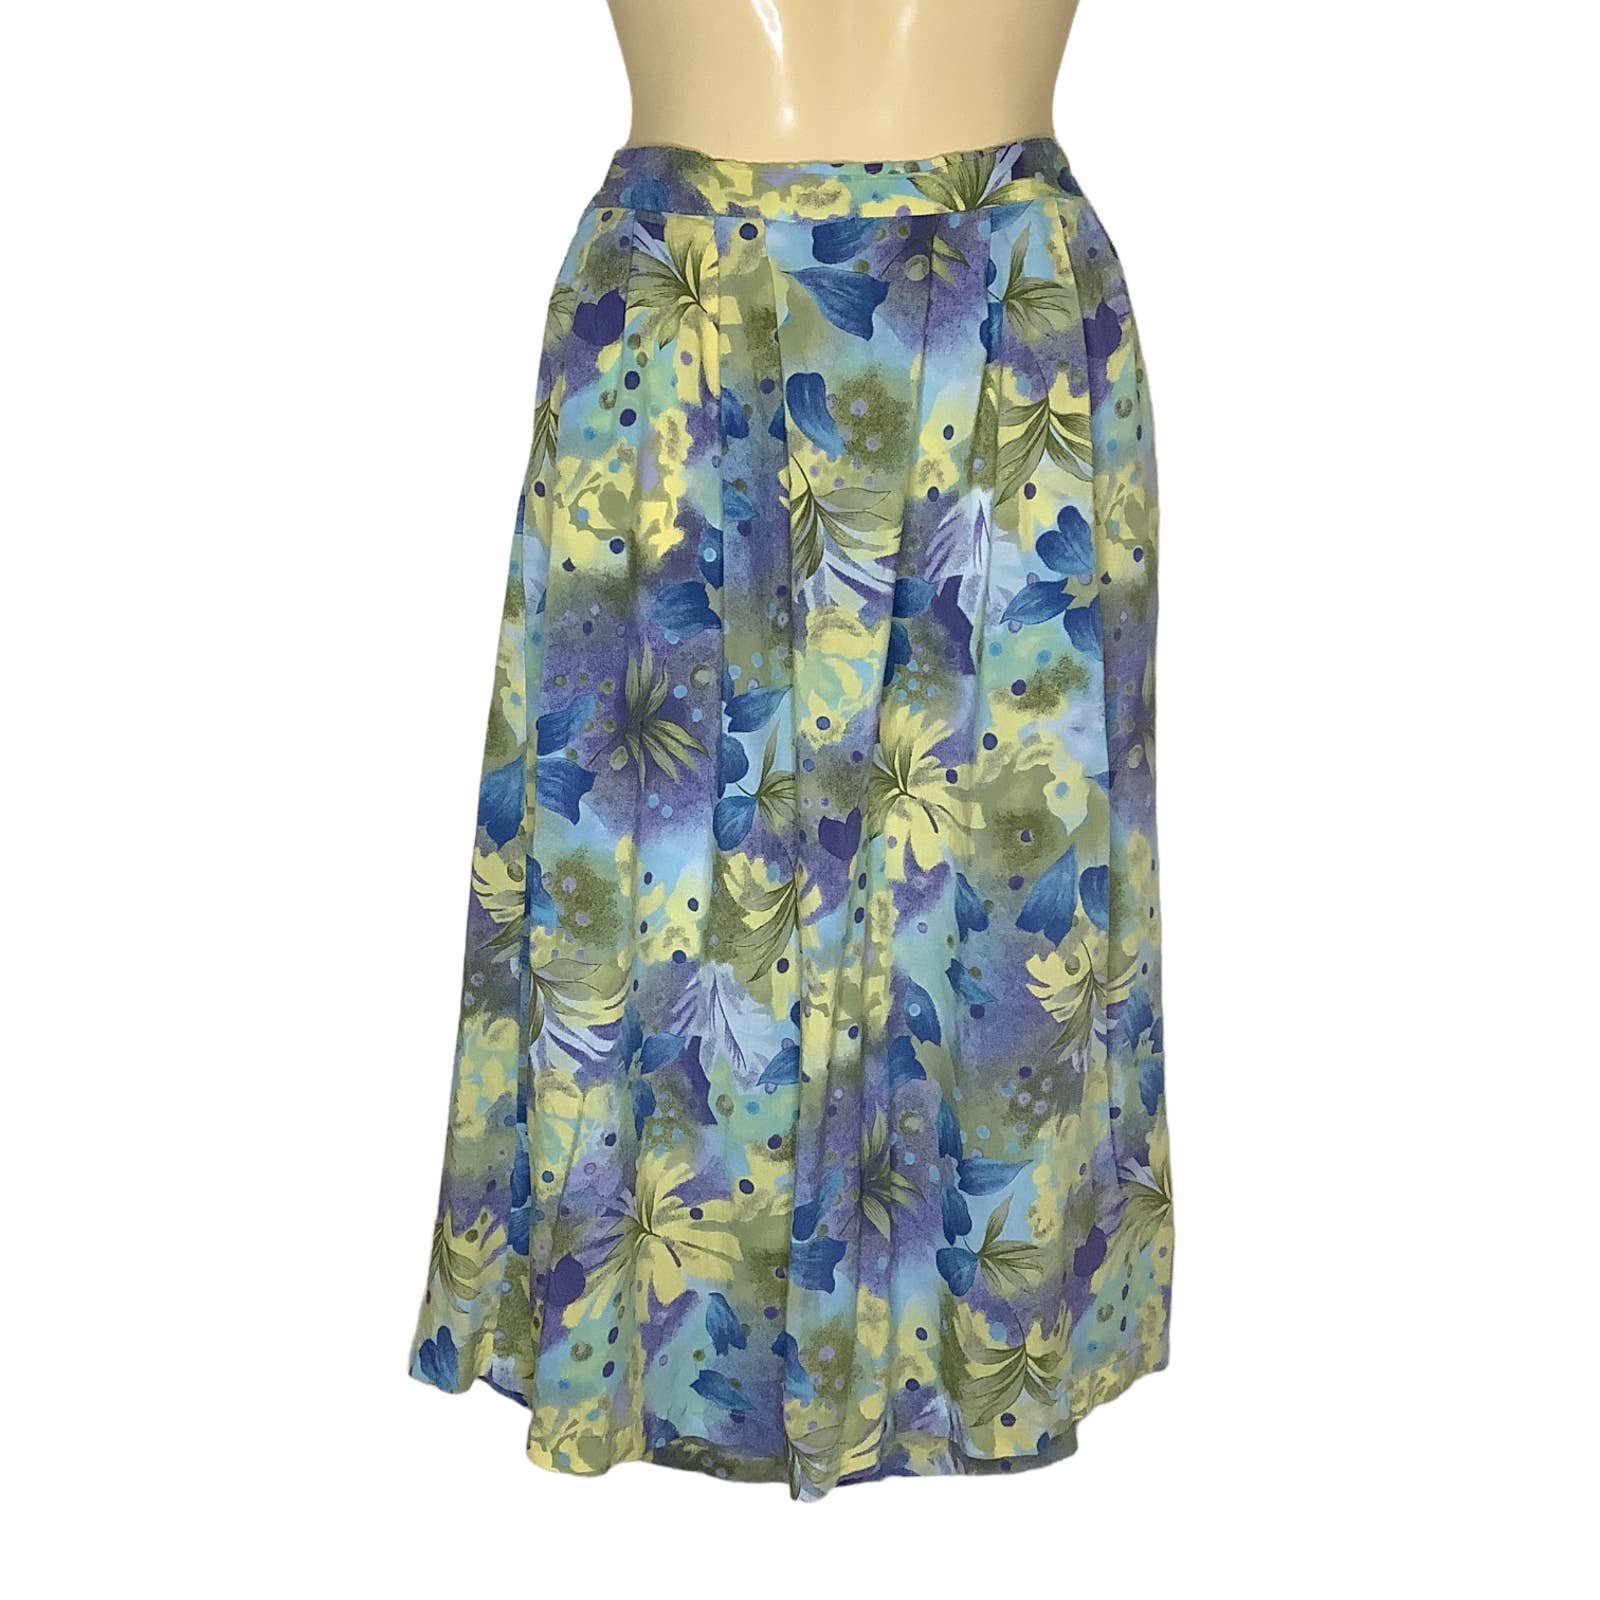 Buy Vintage Skirt Womens Medium Blue Yellow Midi Floral Pleated Cottagecore 90s Y2K Kp1VH7p9m Store Online